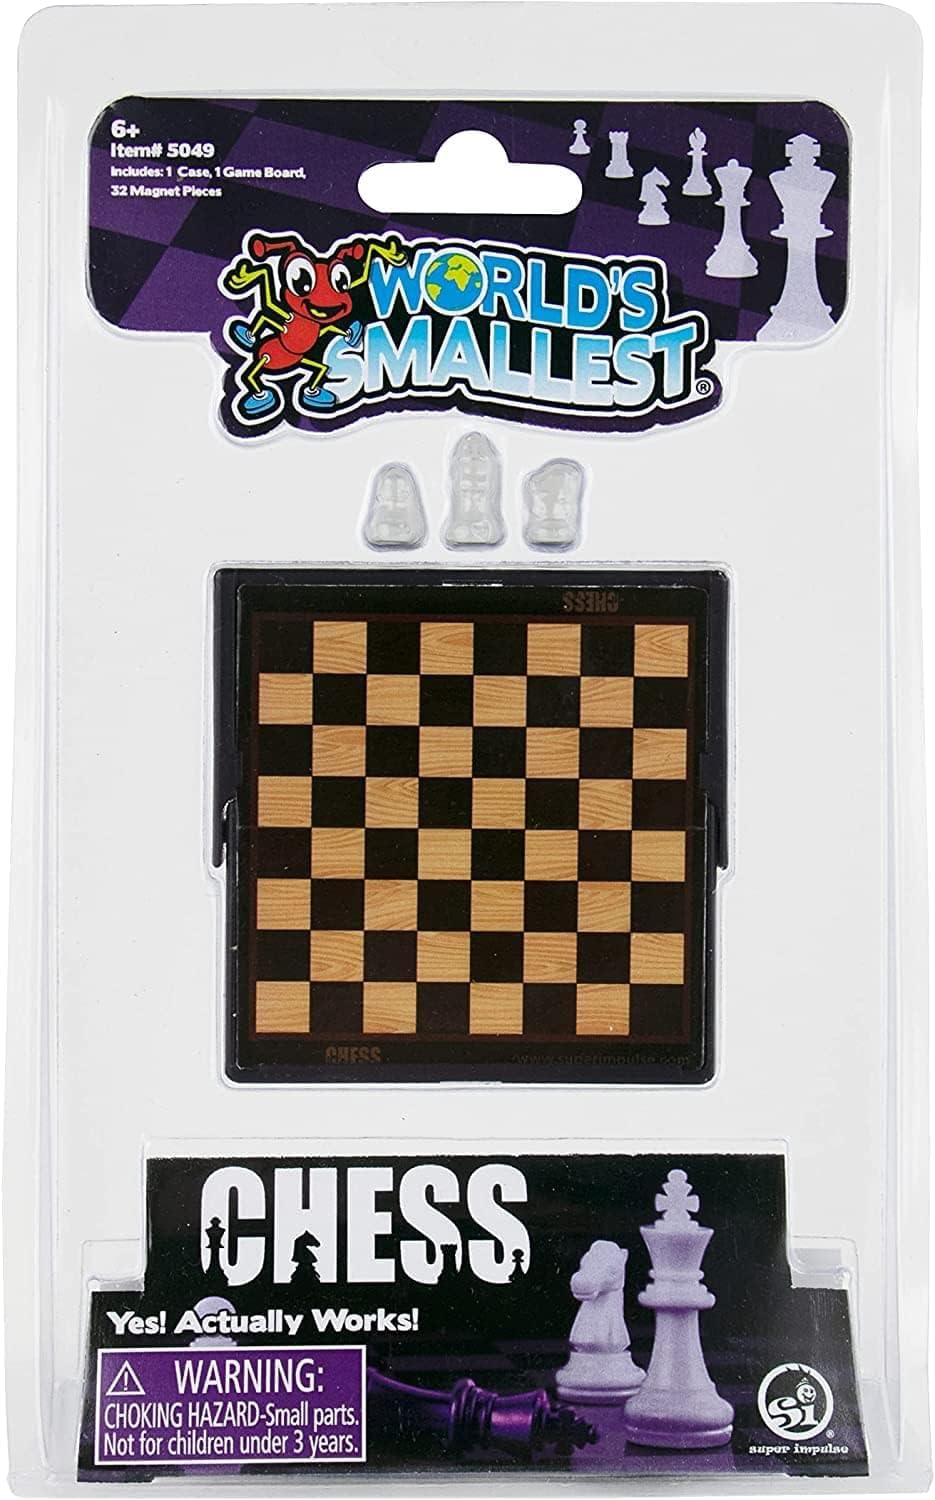 World's Smallest Chess